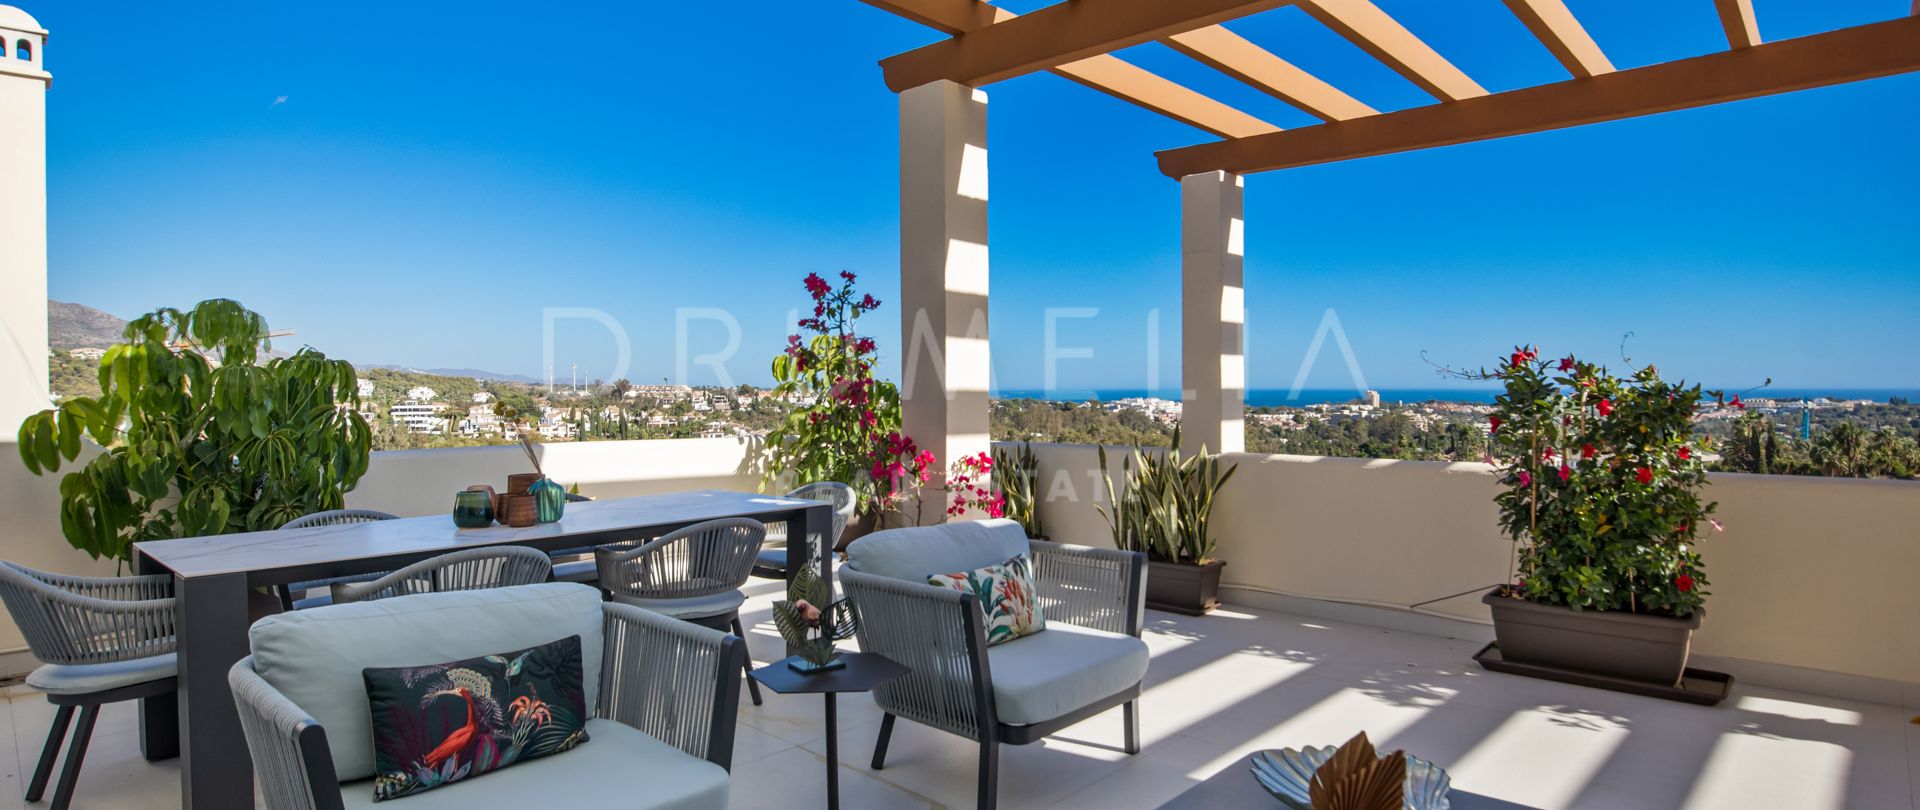 Renoviertes modernes Luxus-Duplex-Penthouse mit fantastischem Meer- und Bergblick in Los Belvederes, Nueva Andalucía, Marbella